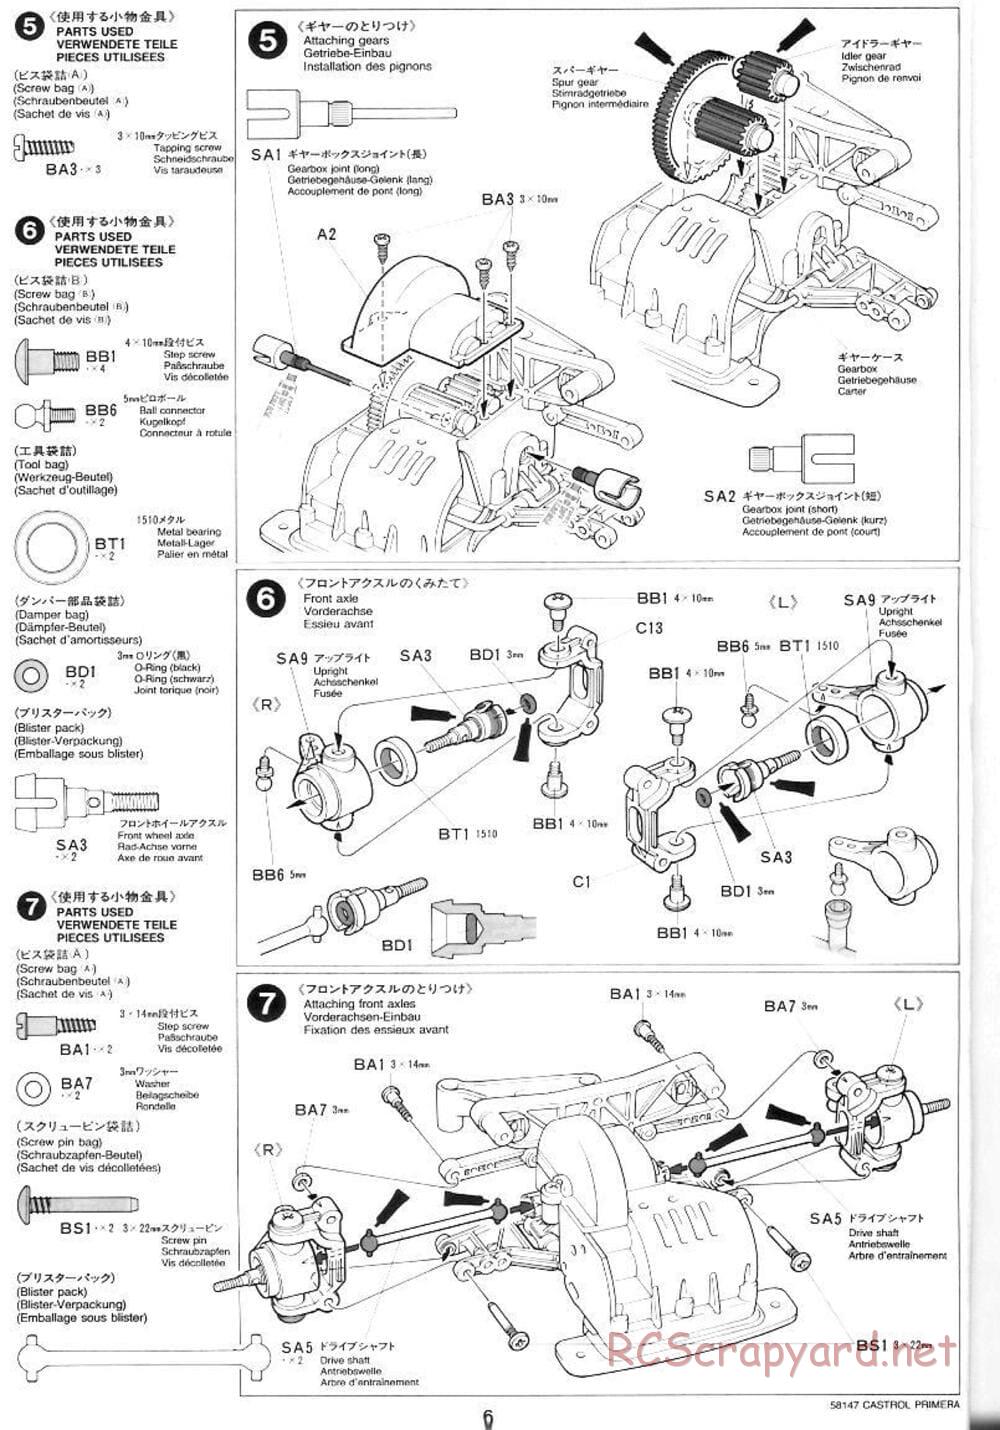 Tamiya - Castrol Nissan Primera JTCC - FF-01 Chassis - Manual - Page 6